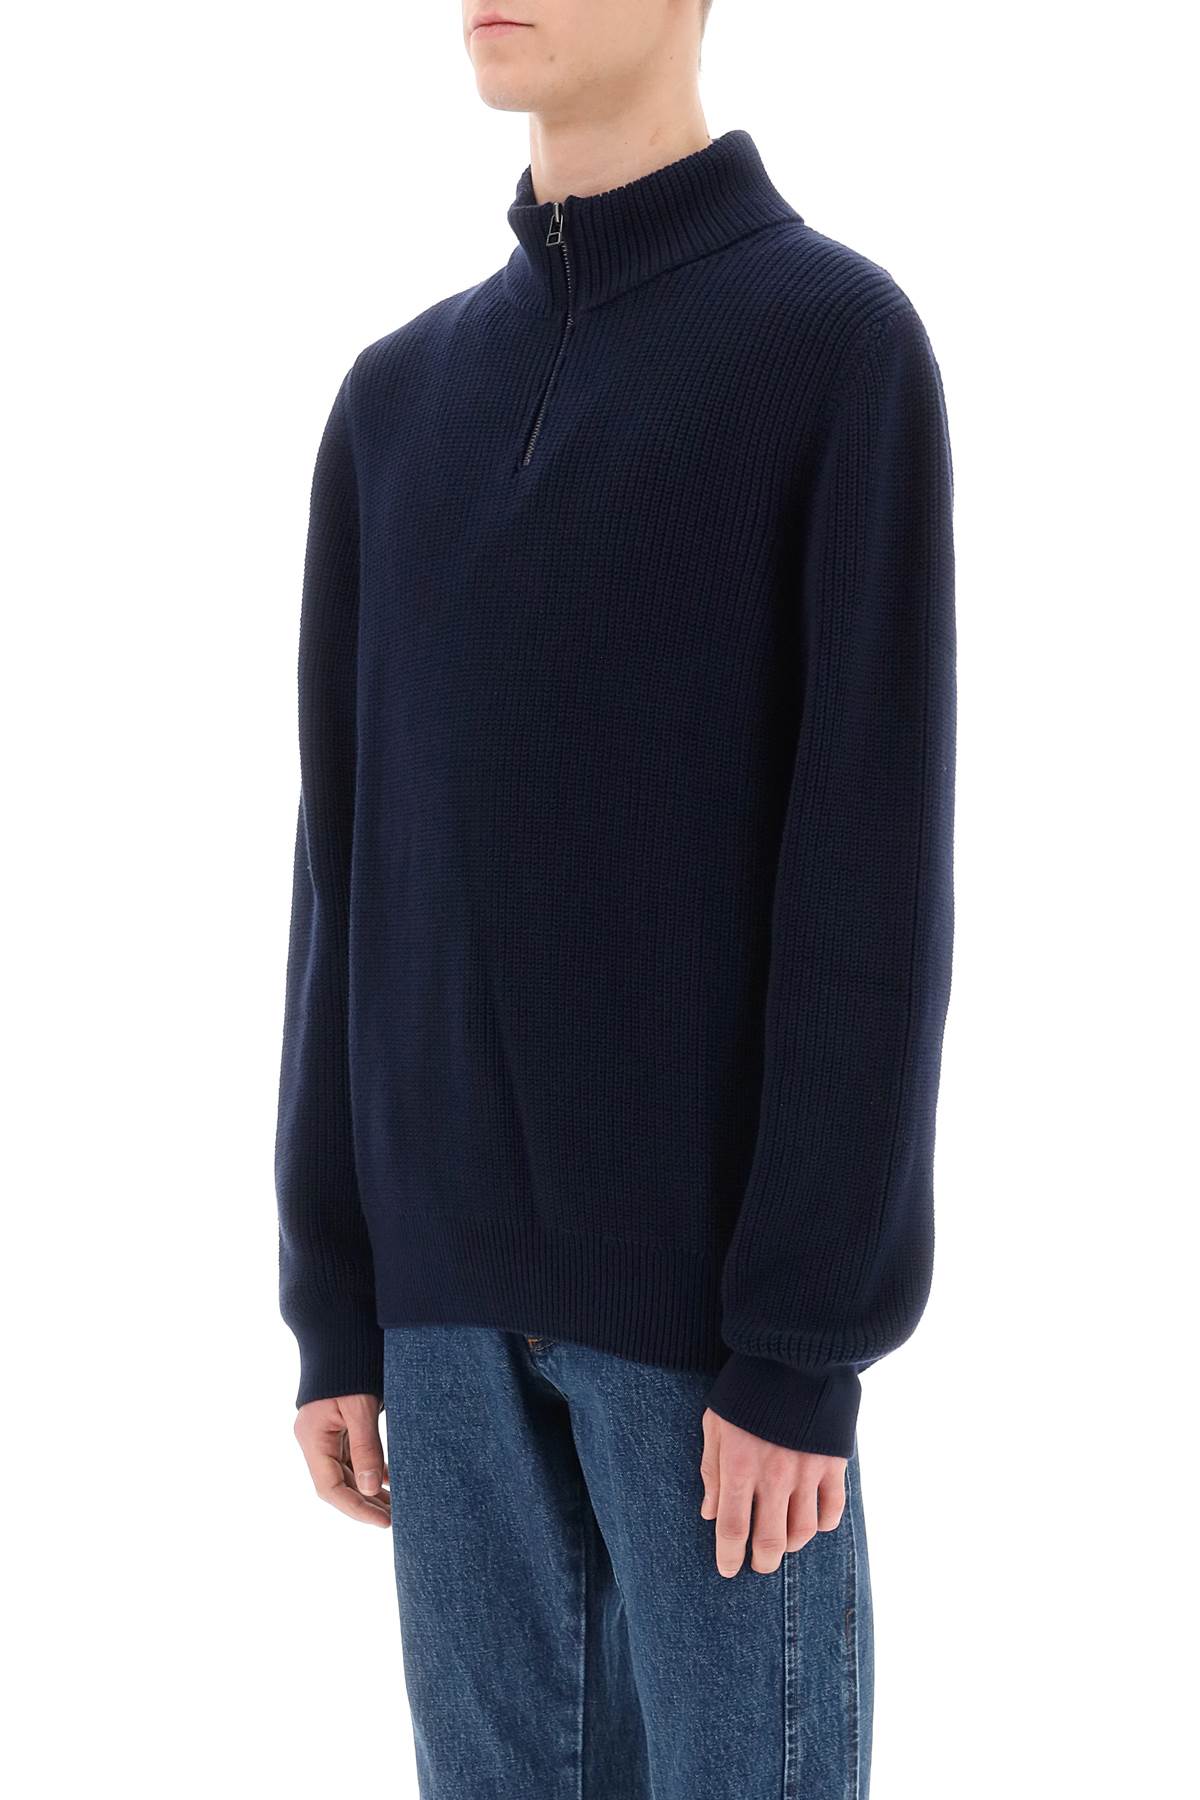 A.P.C. A.p.c. sweater with partial zipper placket